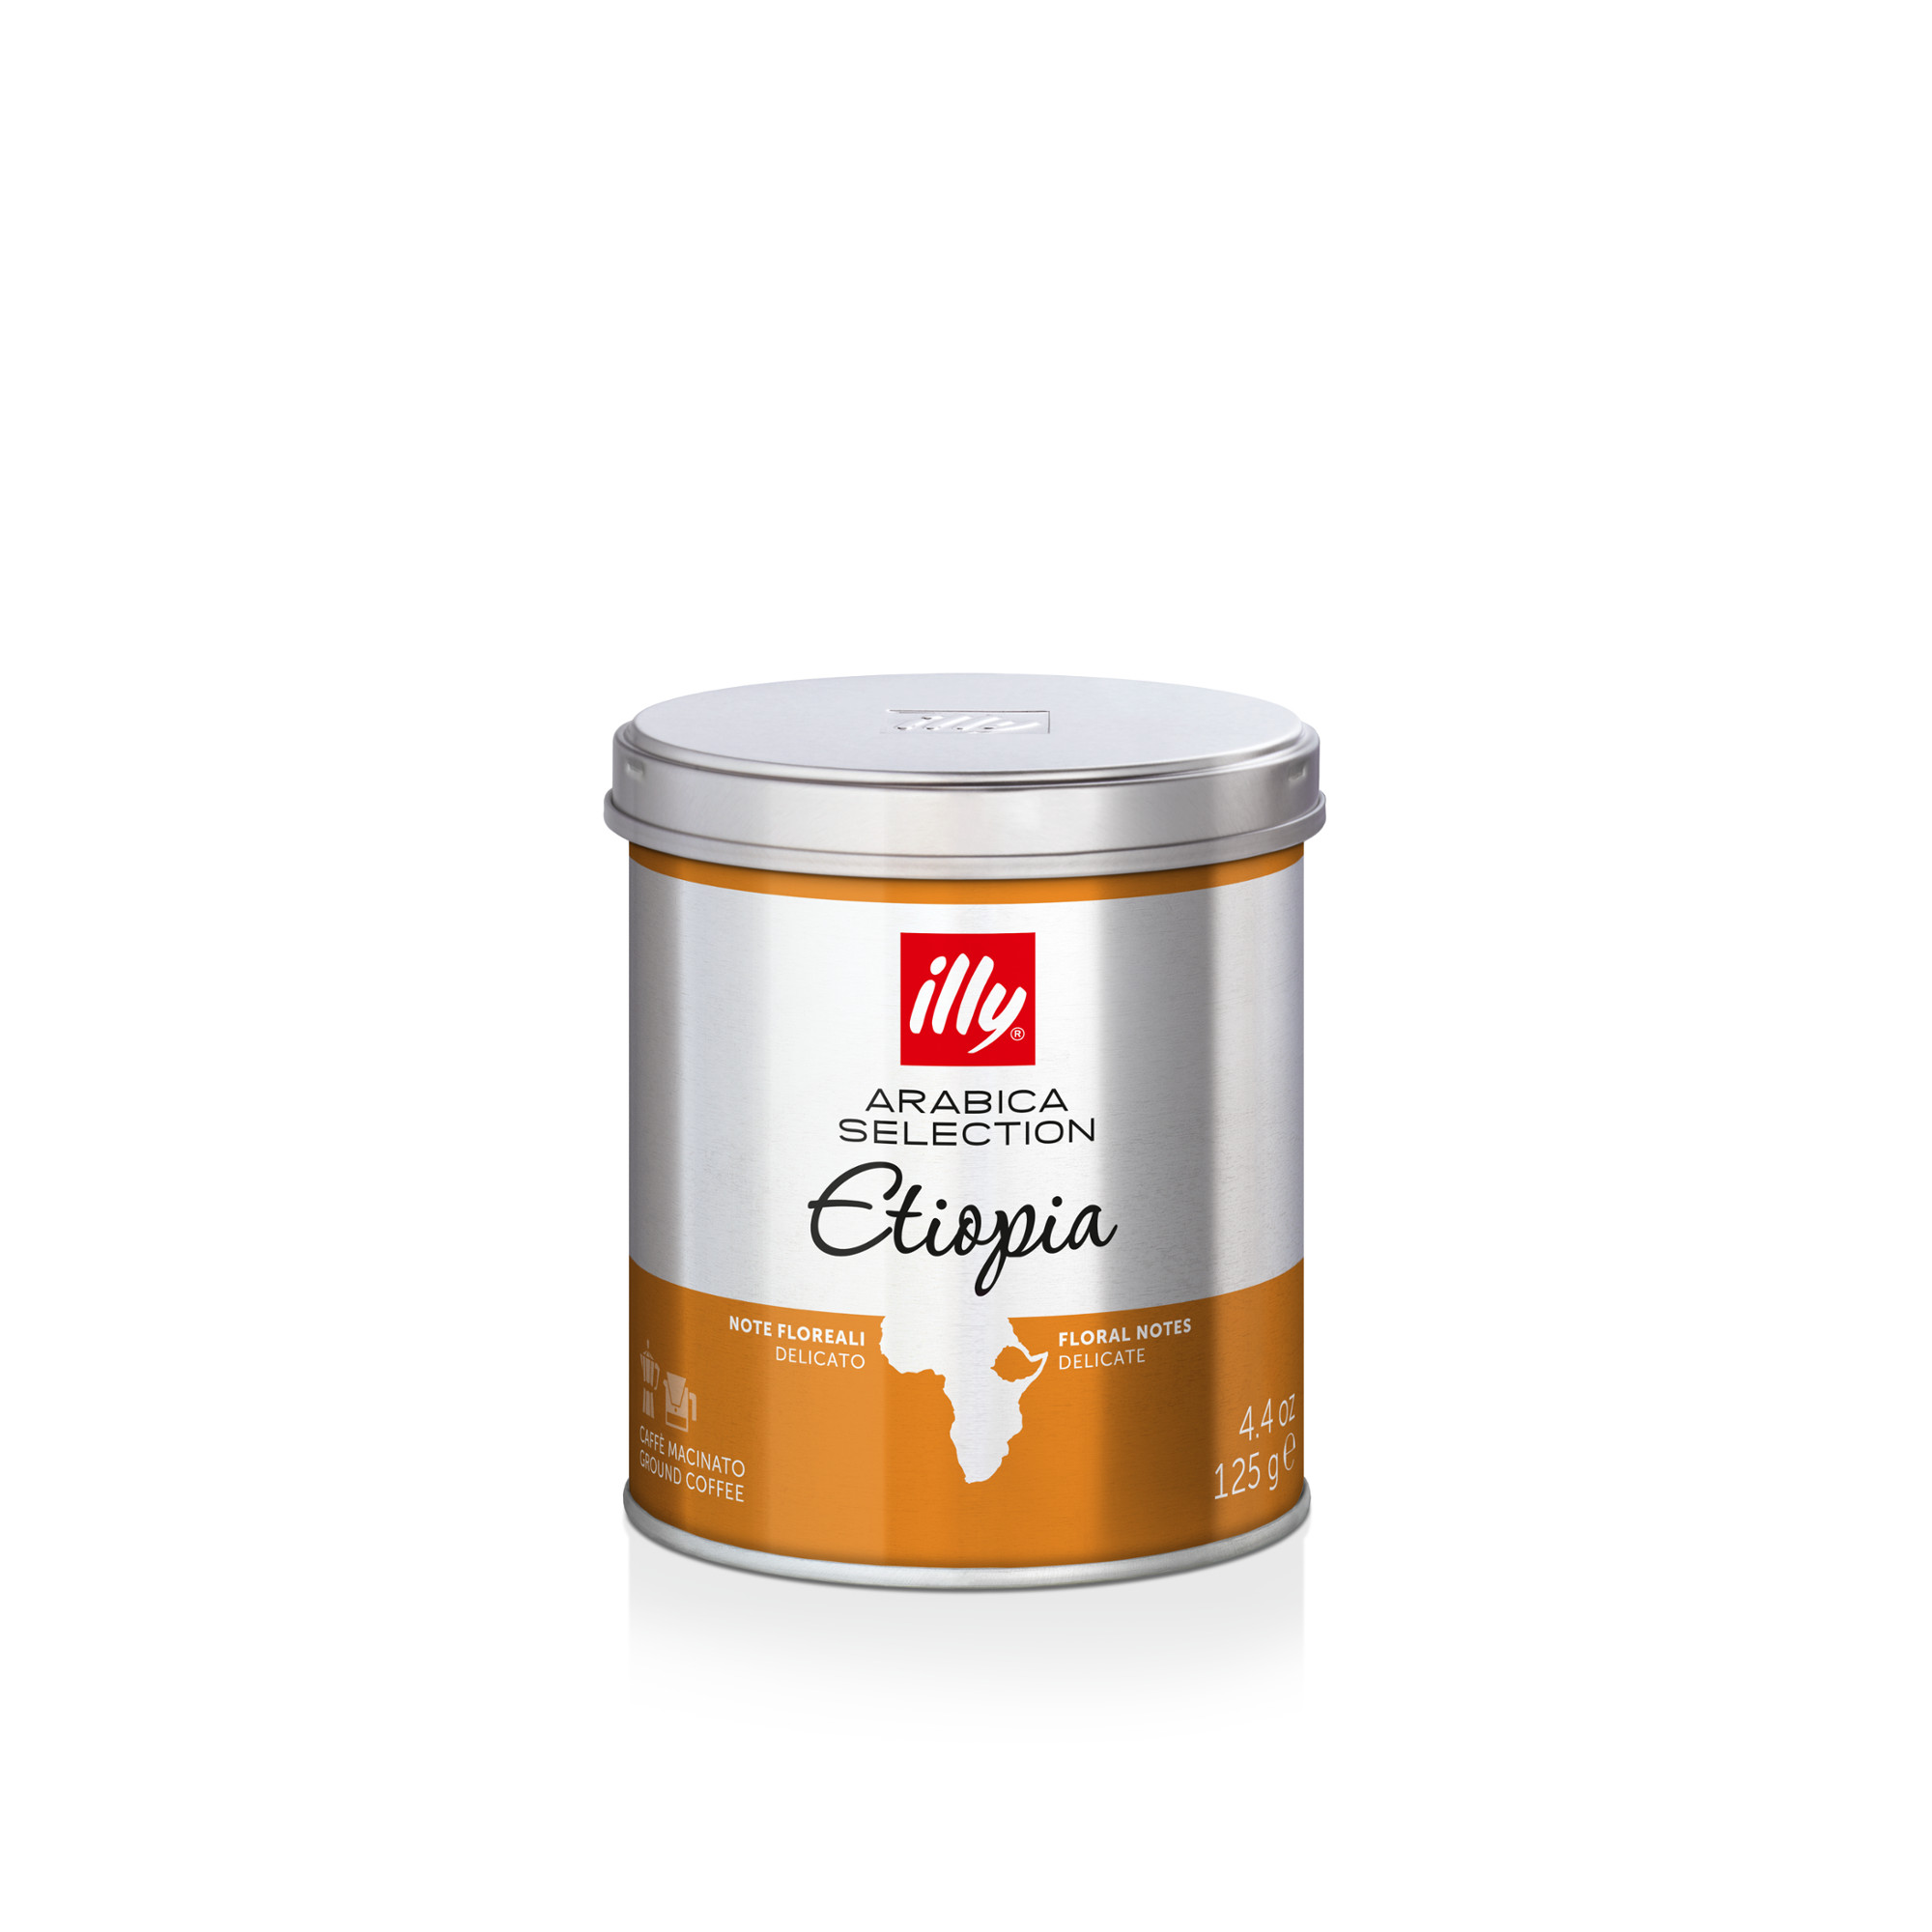 Ground Espresso Arabica Selection Ethiopia Coffee -125g